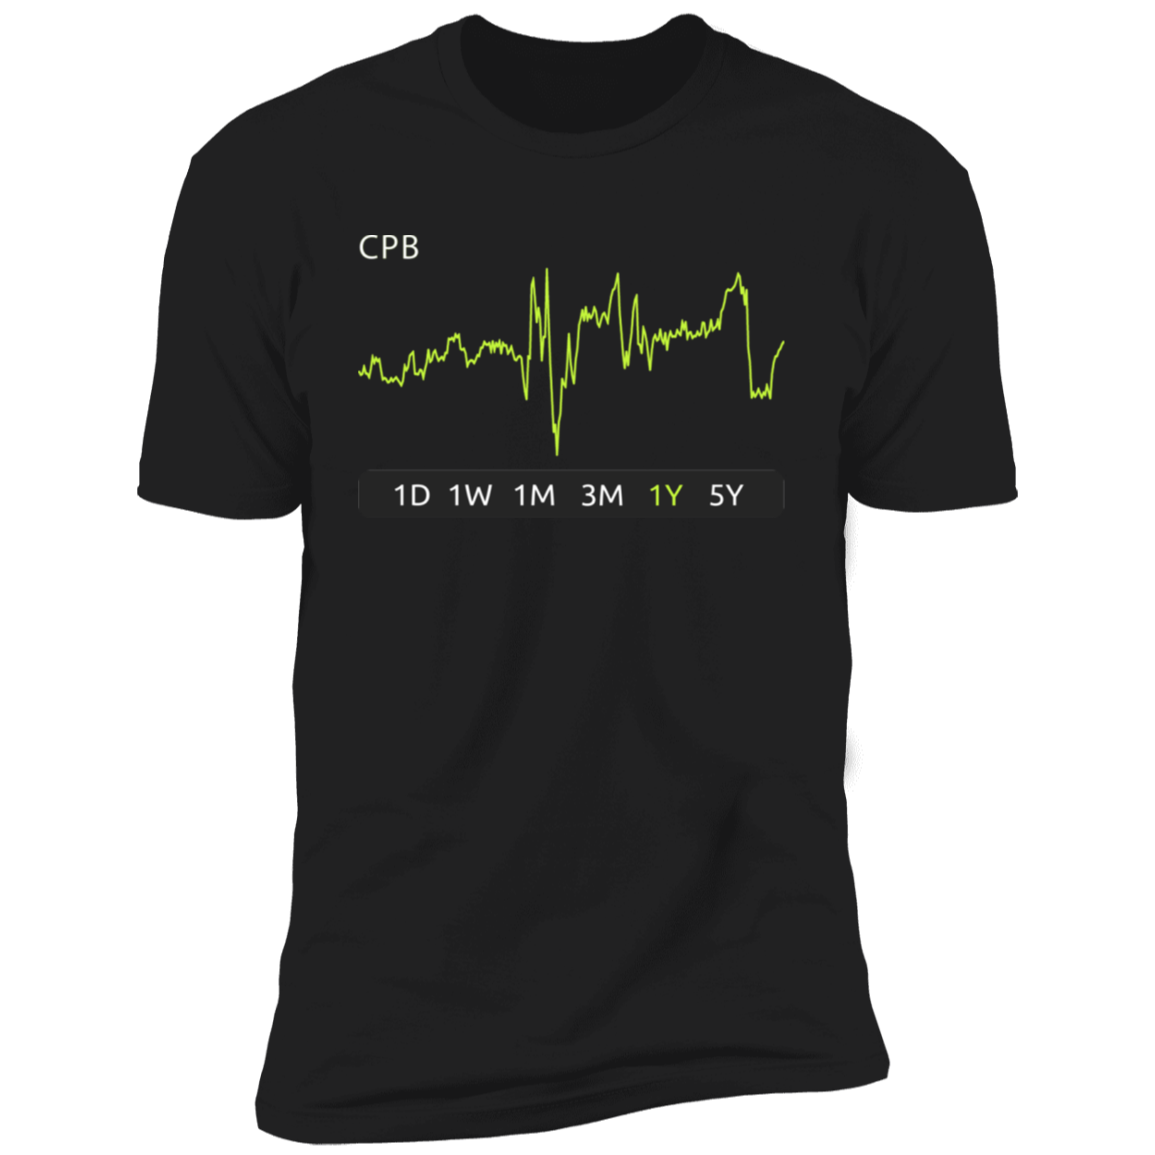 CPB Stock 1y Premium T-Shirt